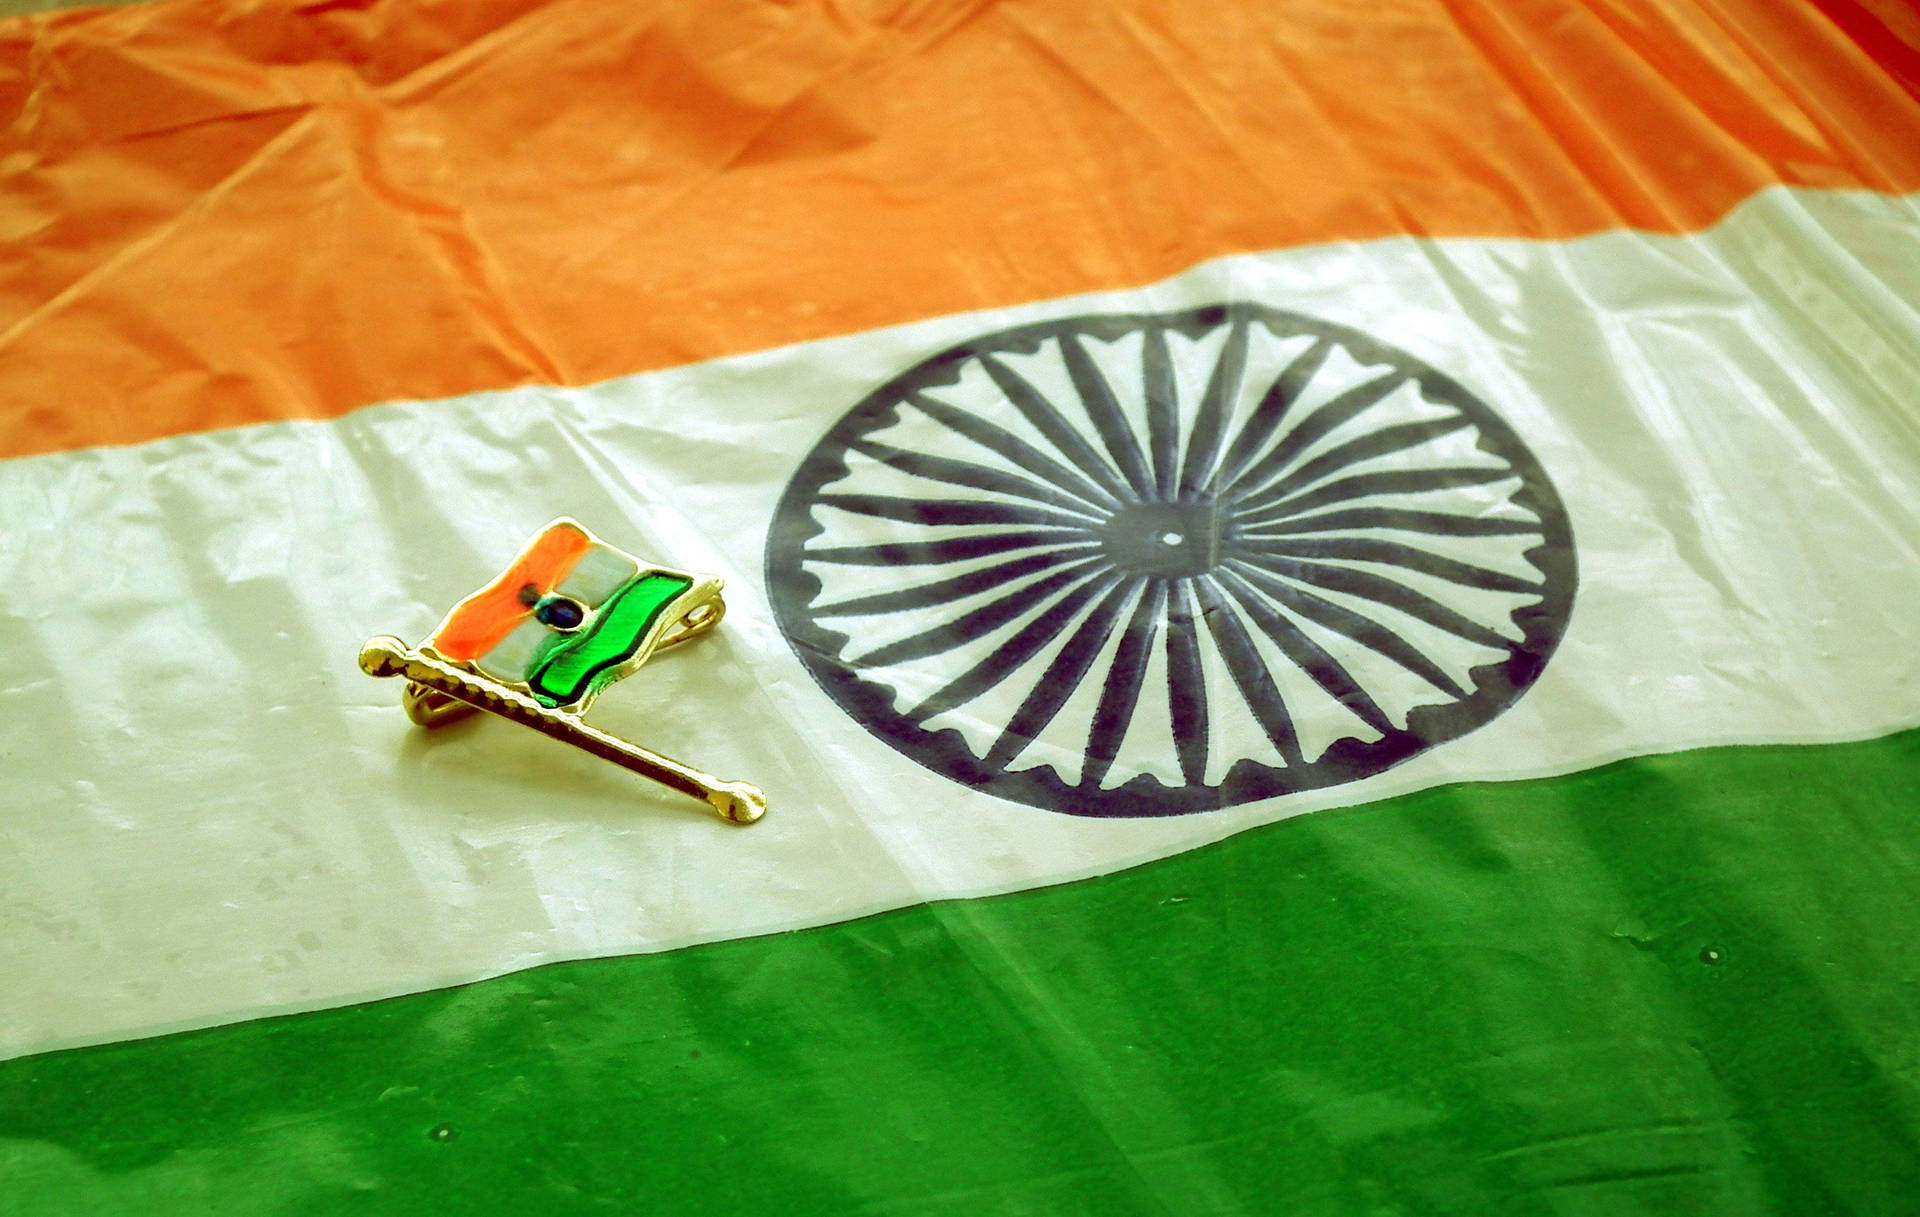 Indian Flag Hd Big And Small Wallpaper